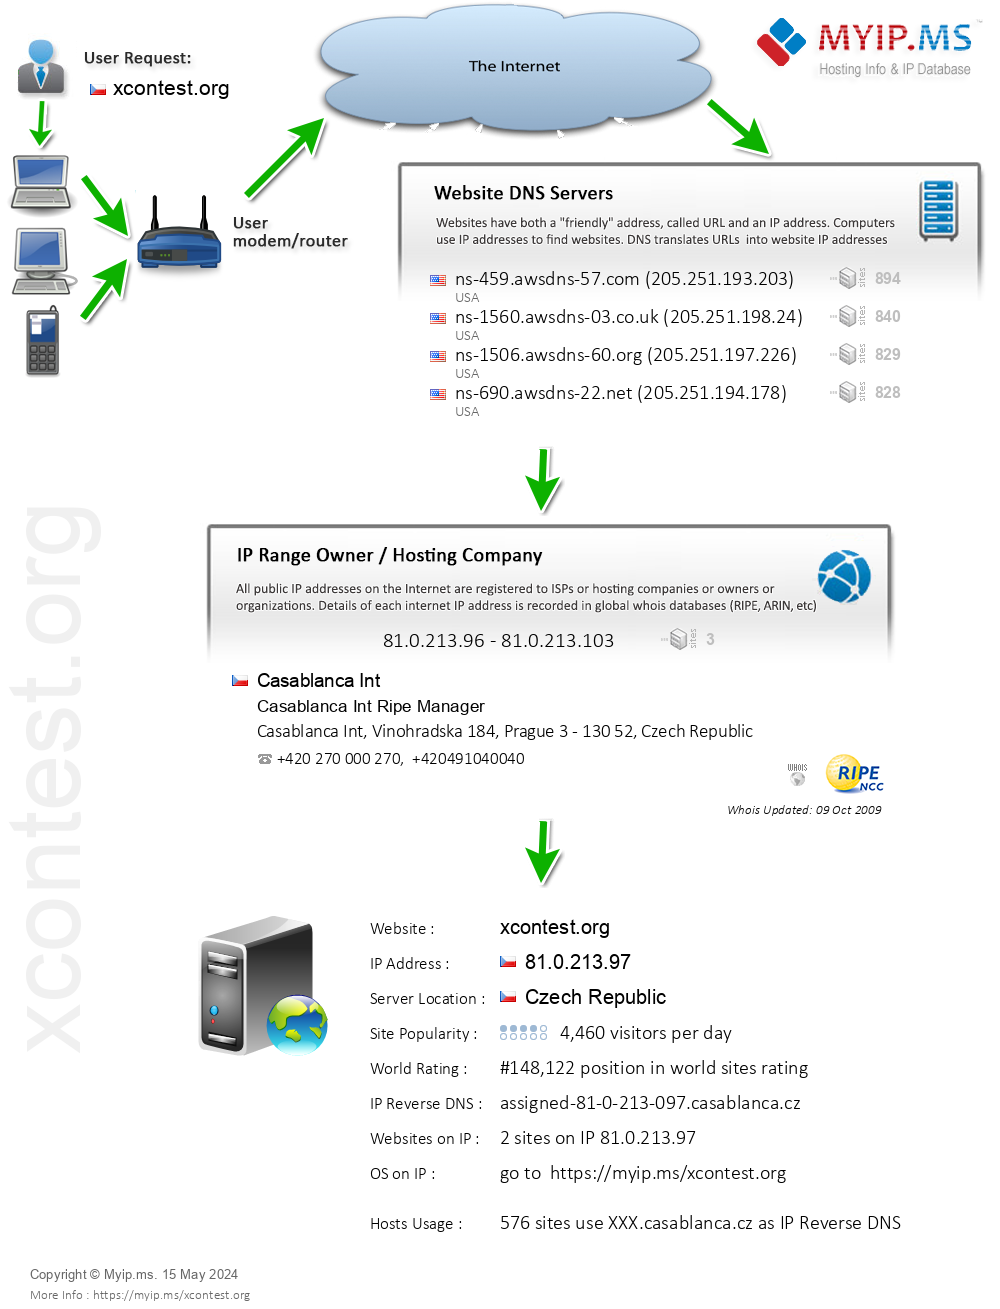 Xcontest.org - Website Hosting Visual IP Diagram